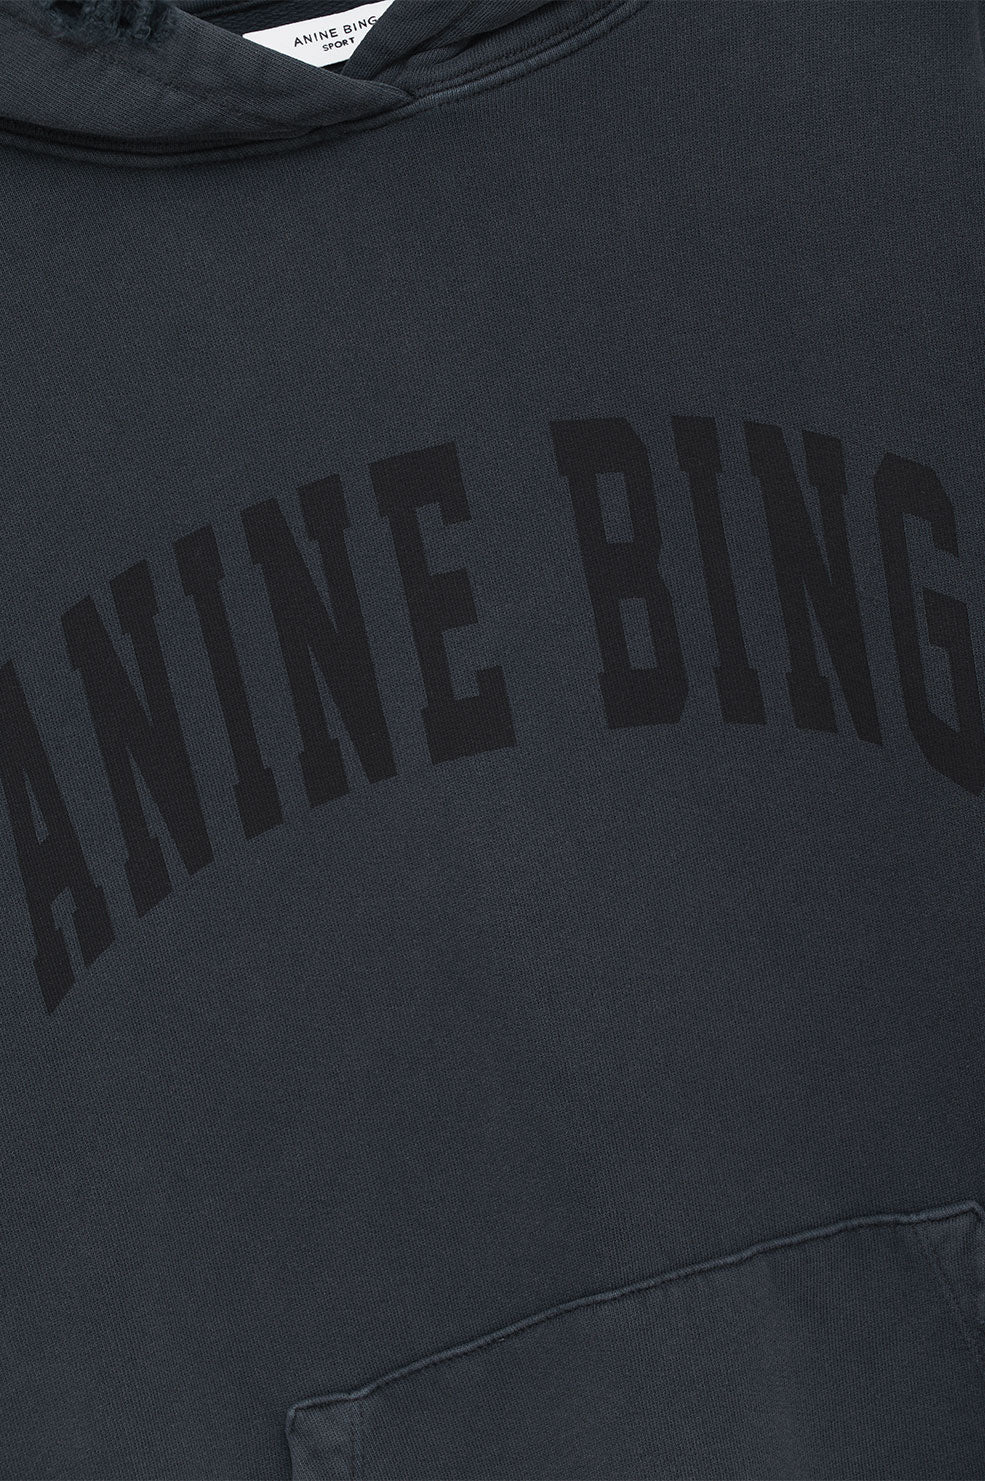 ANINE BING Harvey Sweatshirt - Dark Washed Black - Detail View